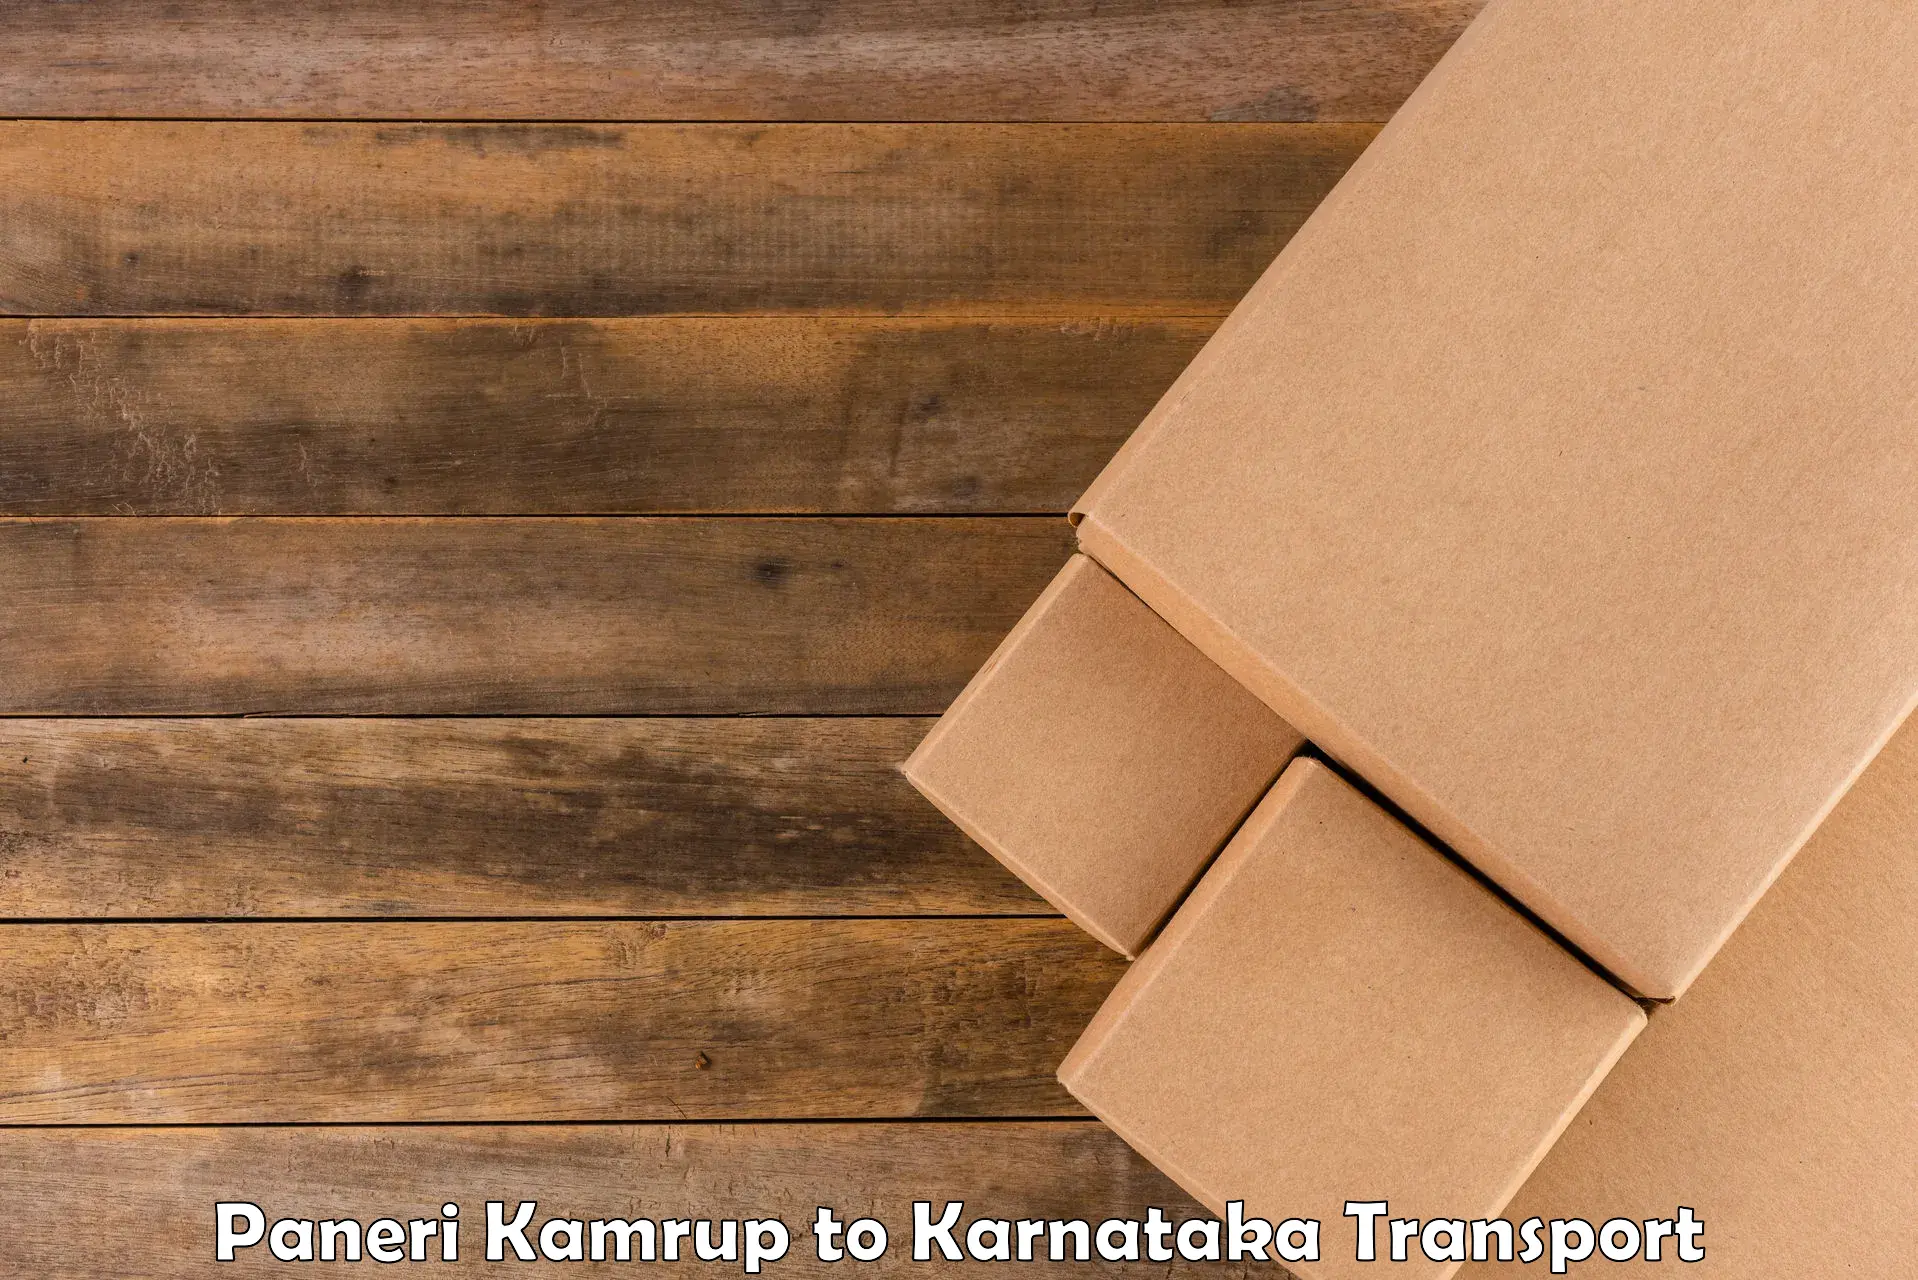 Truck transport companies in India Paneri Kamrup to Salahalli